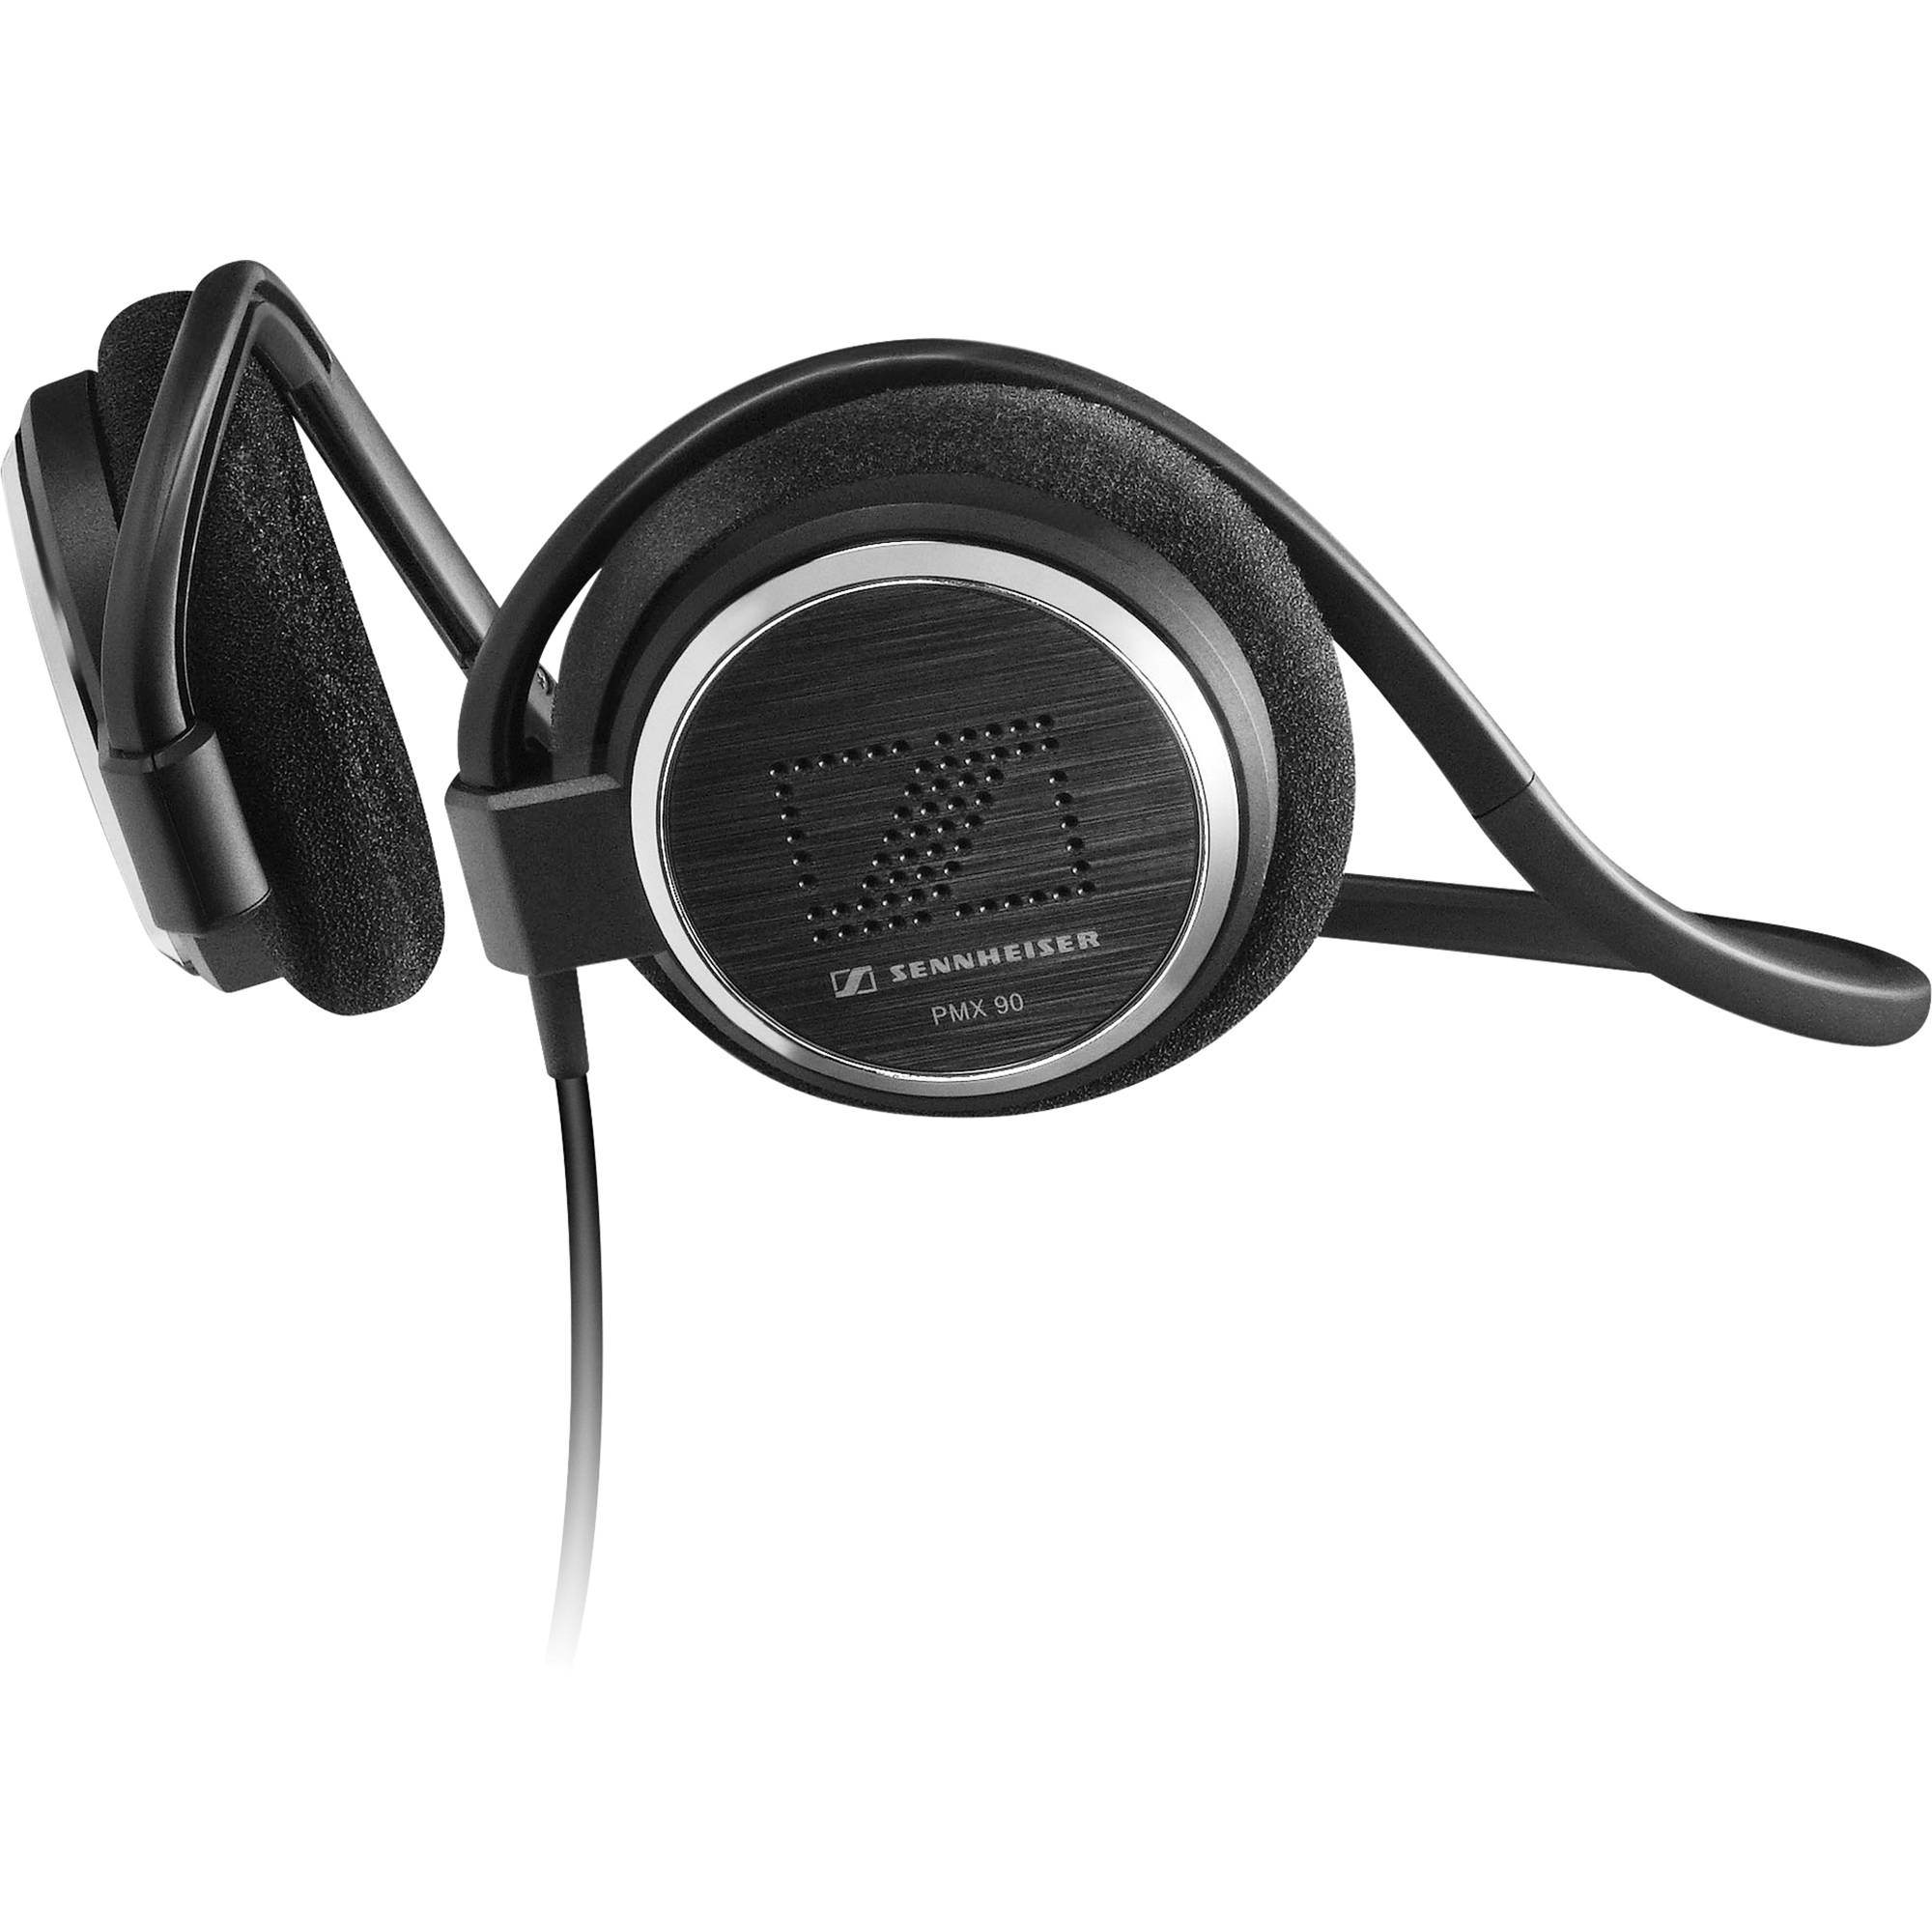 SENNHEISER PMX-90 ON-EAR HEADPHONES (BLACK)